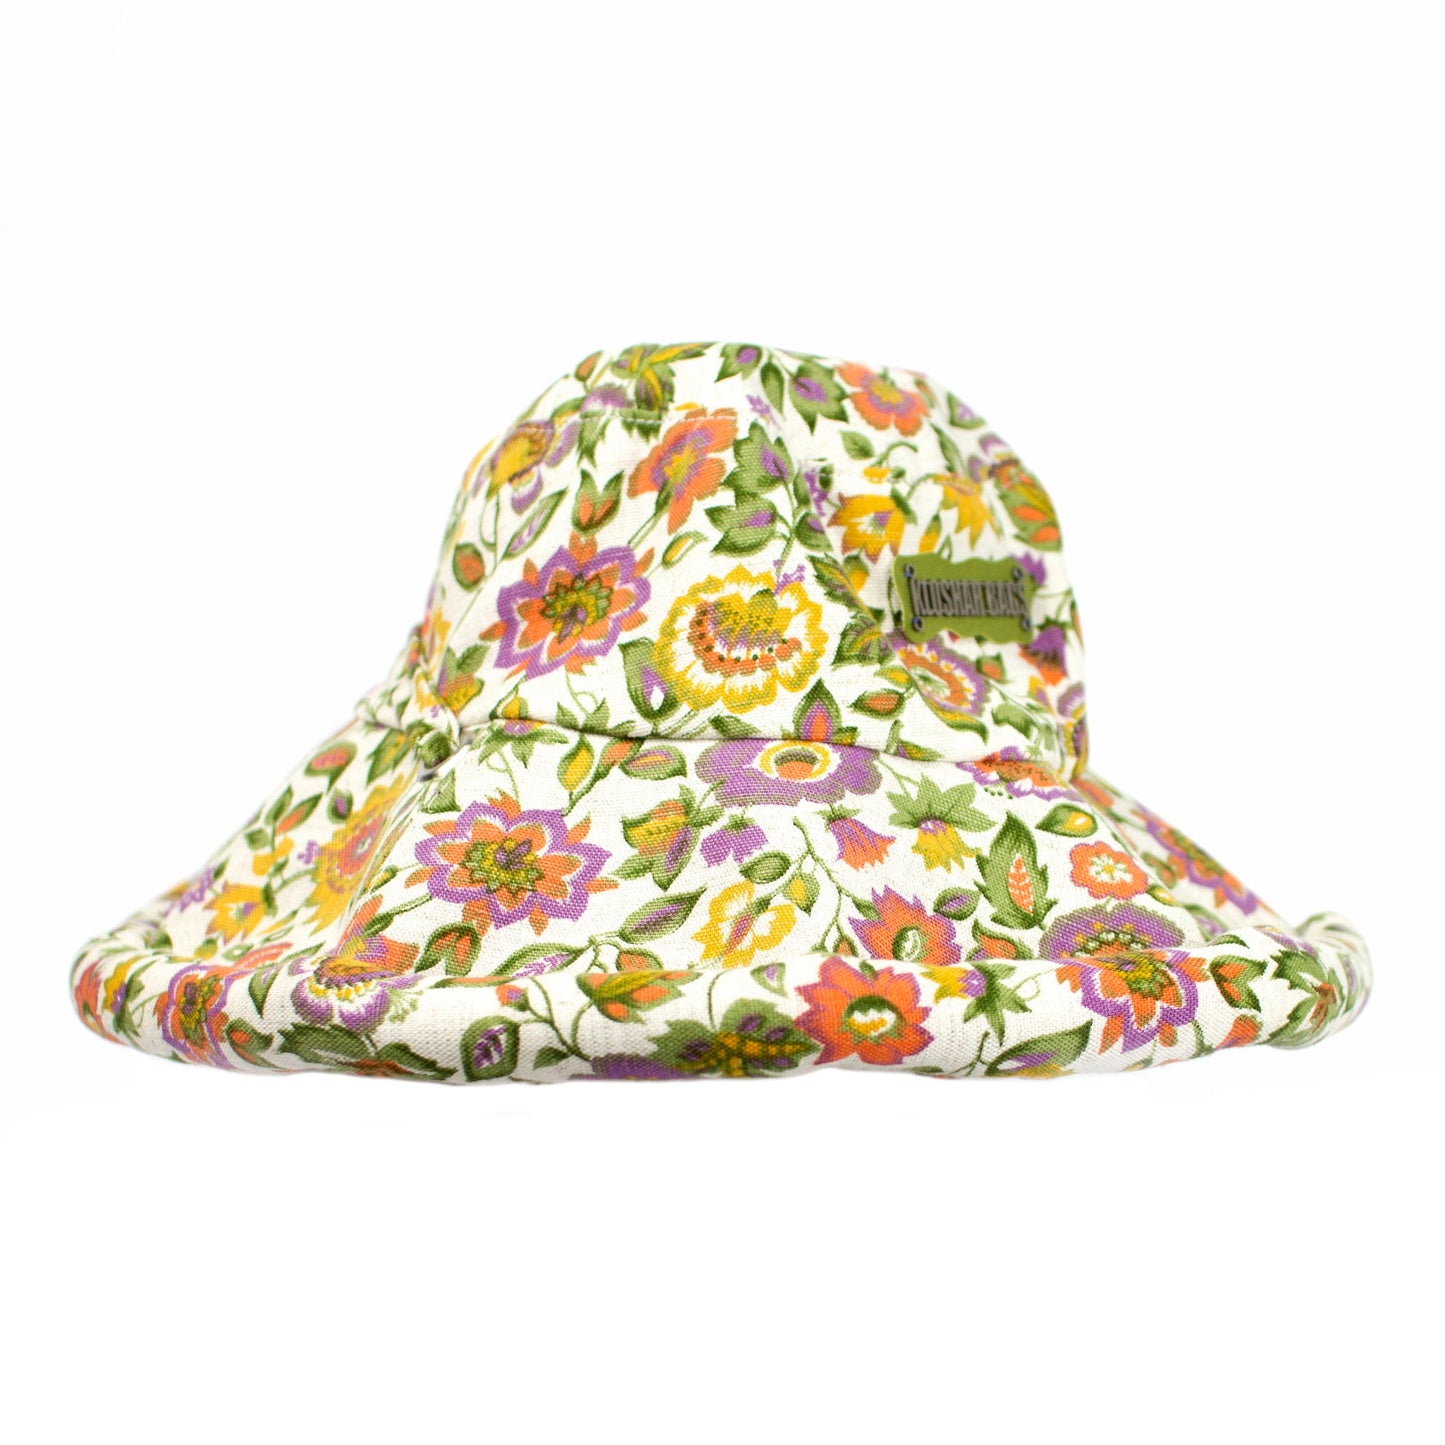 "FLOWERS" large bucket hat